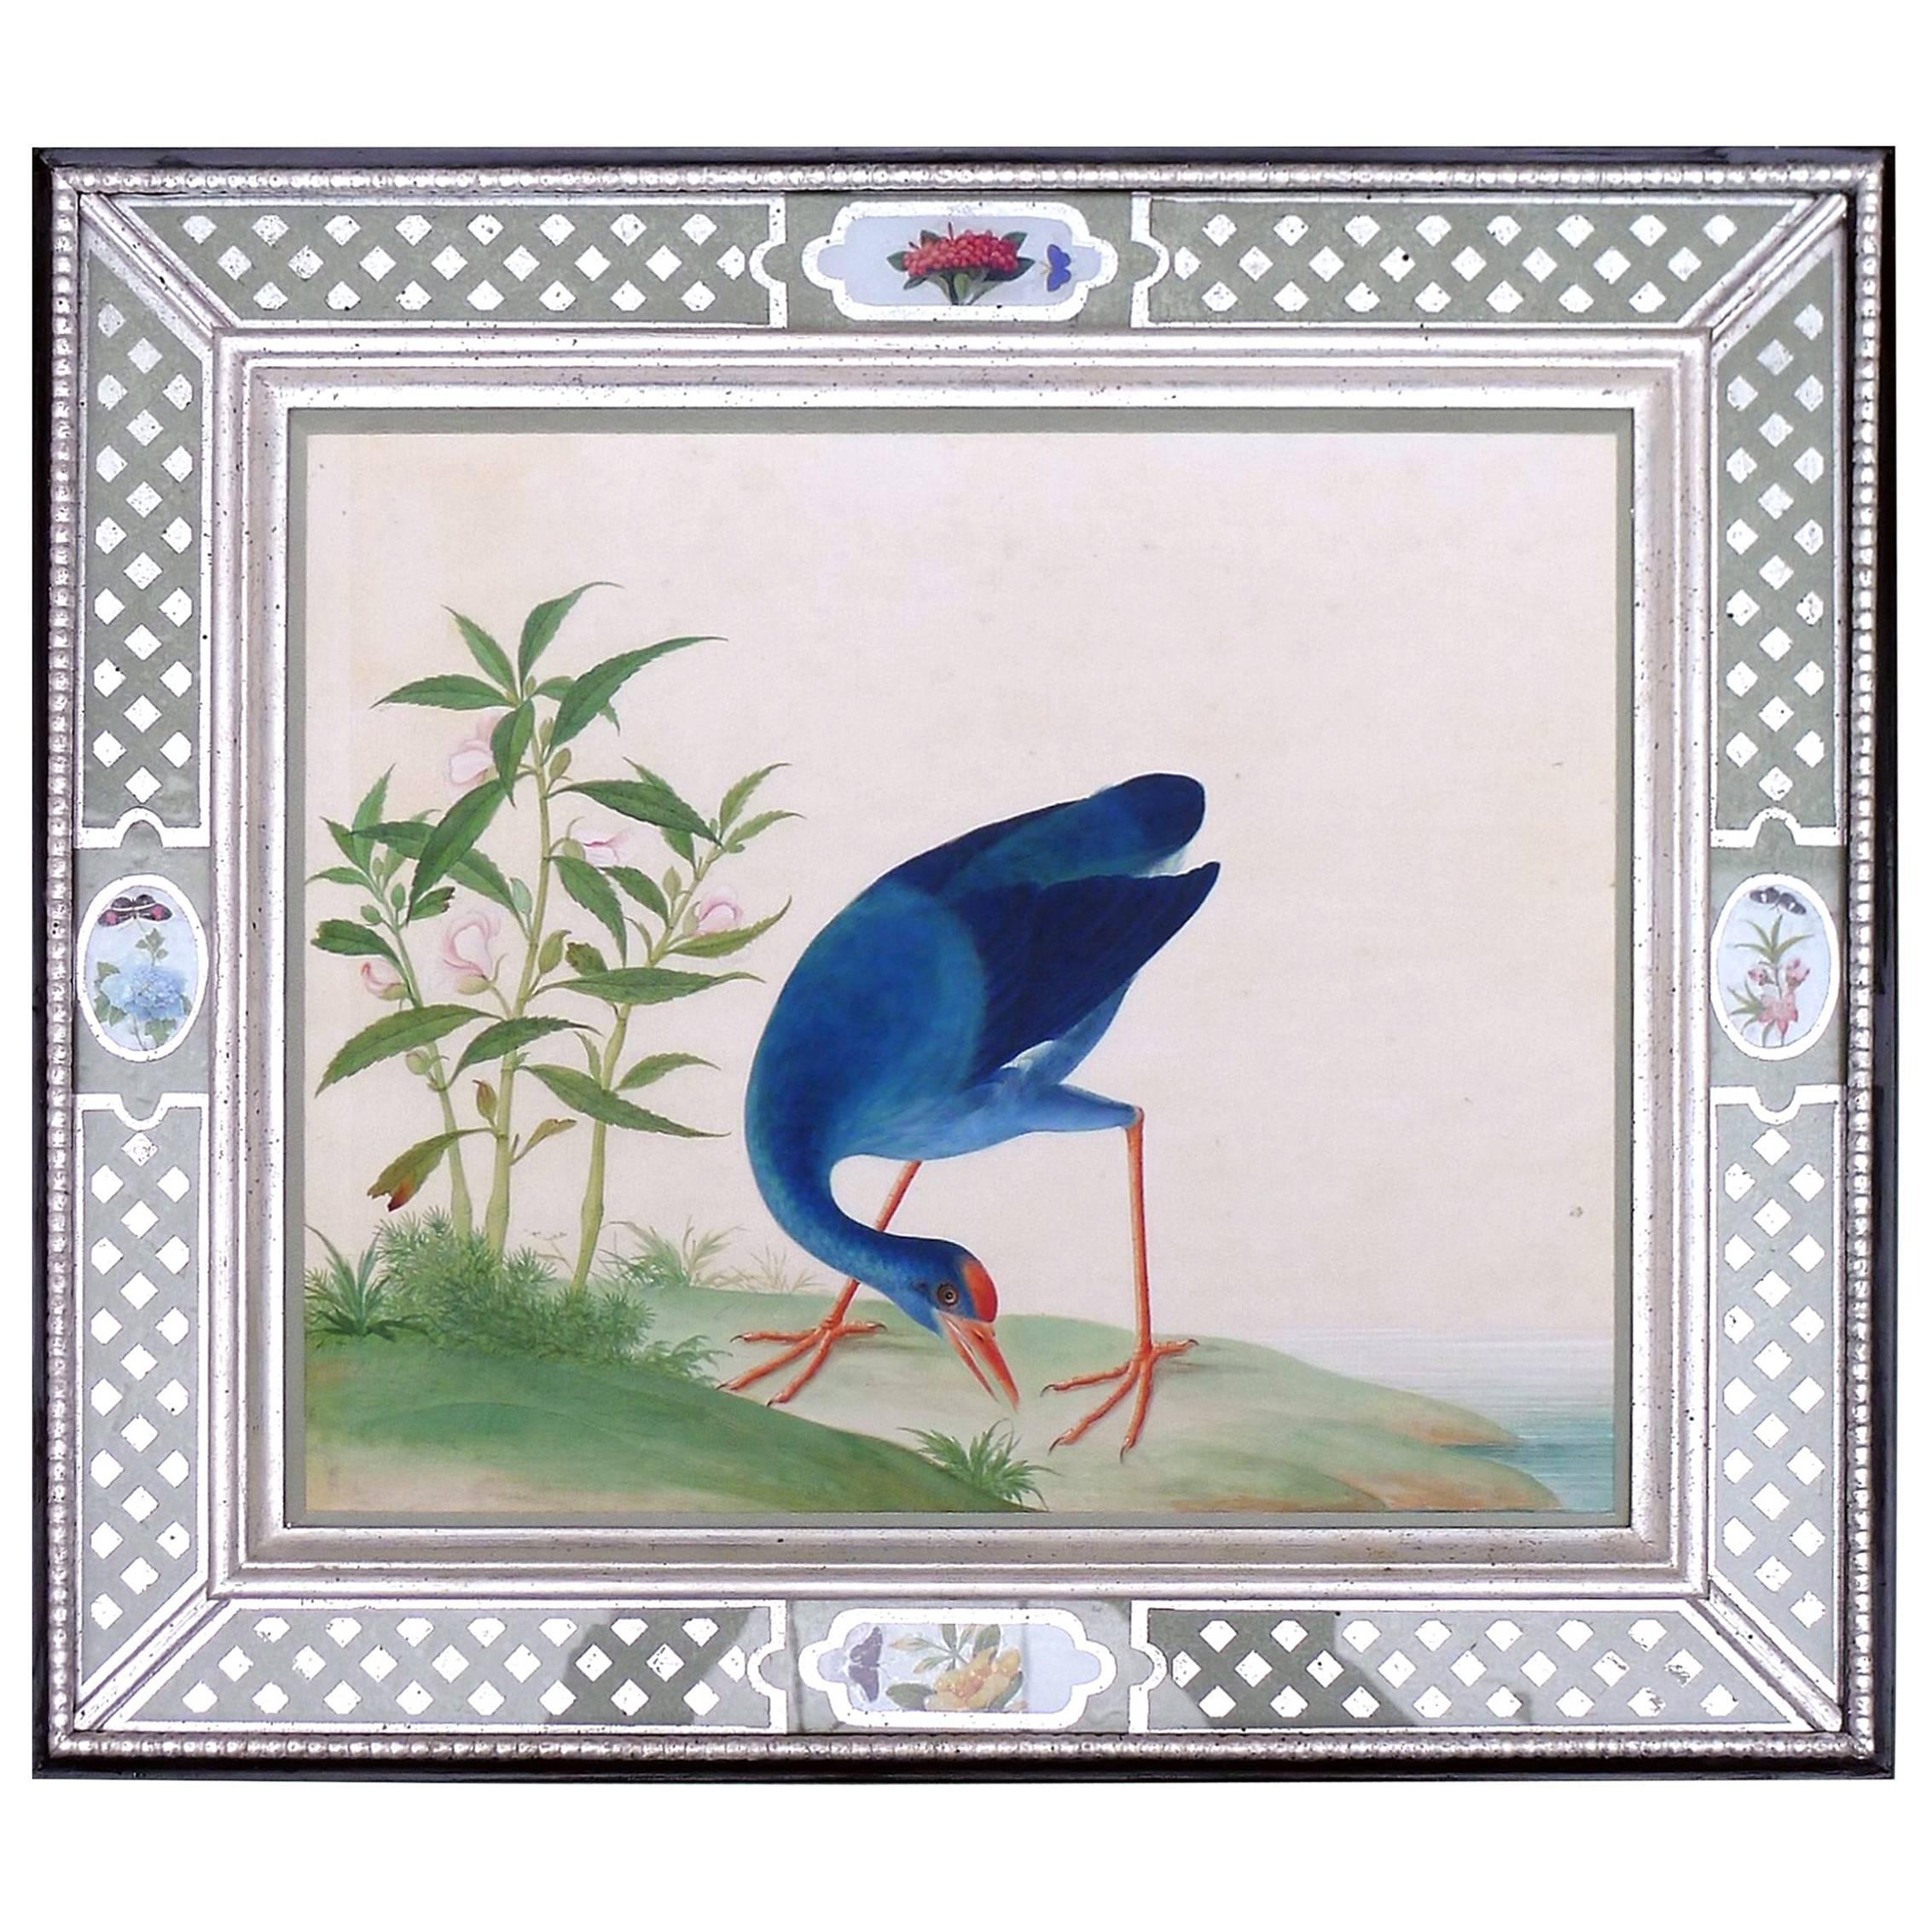 China Trade Large Watercolour Painting of a Bird, circa 1800-1820